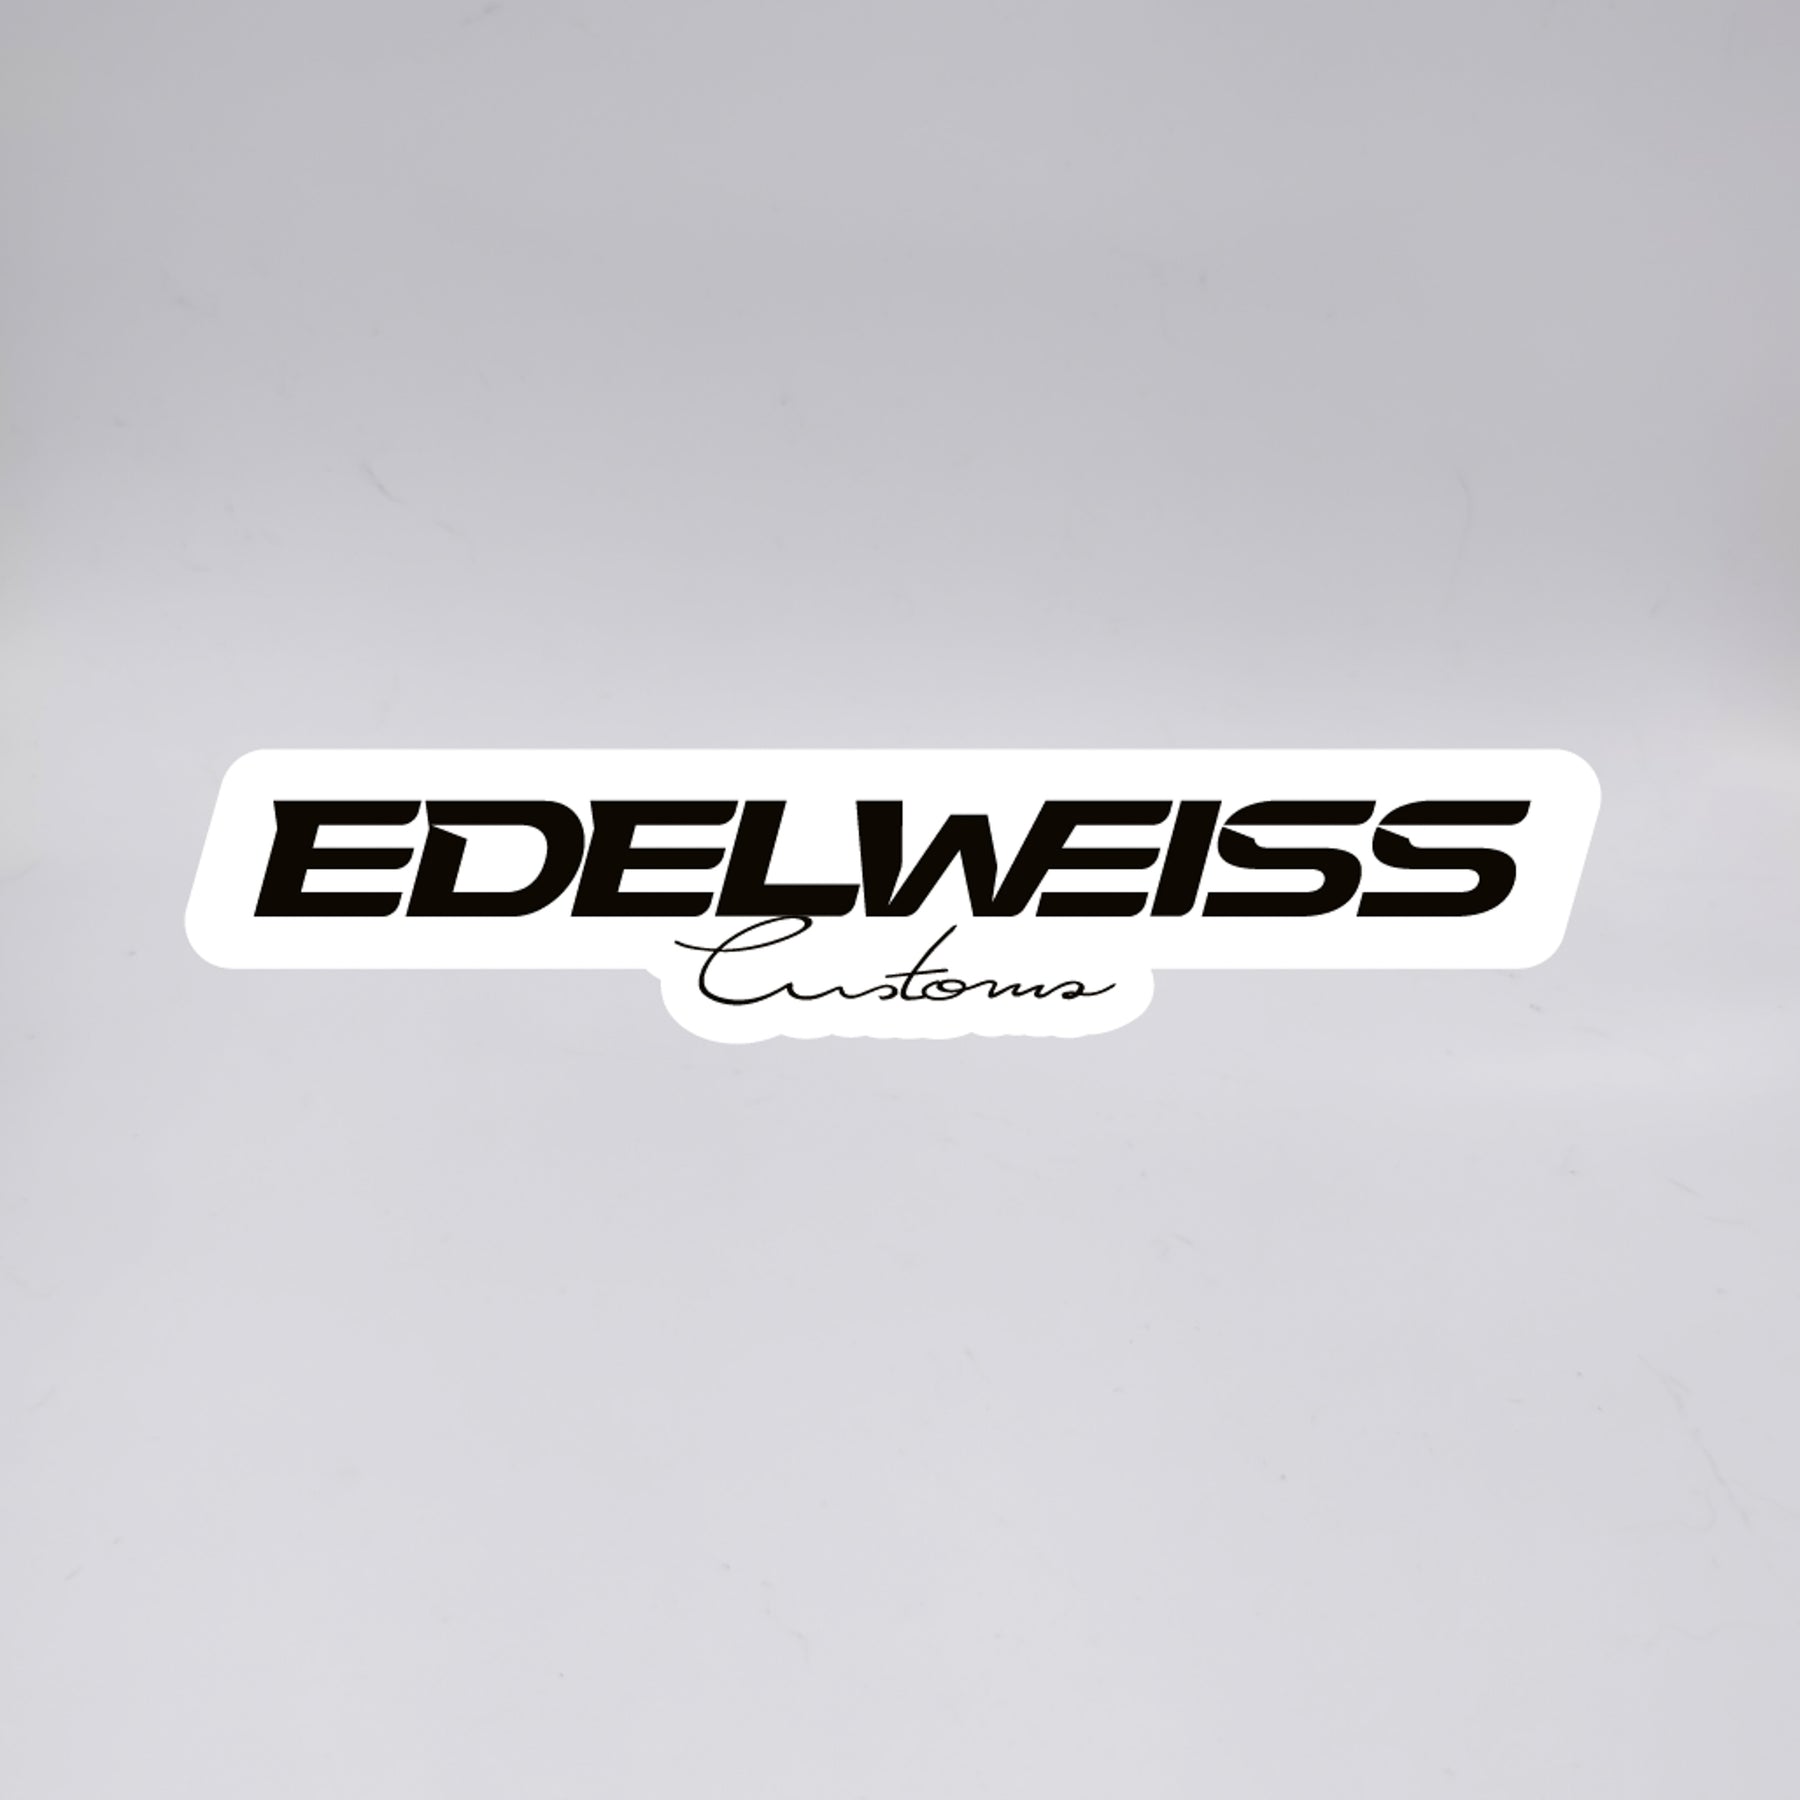 Sticker Edelweiss Customs